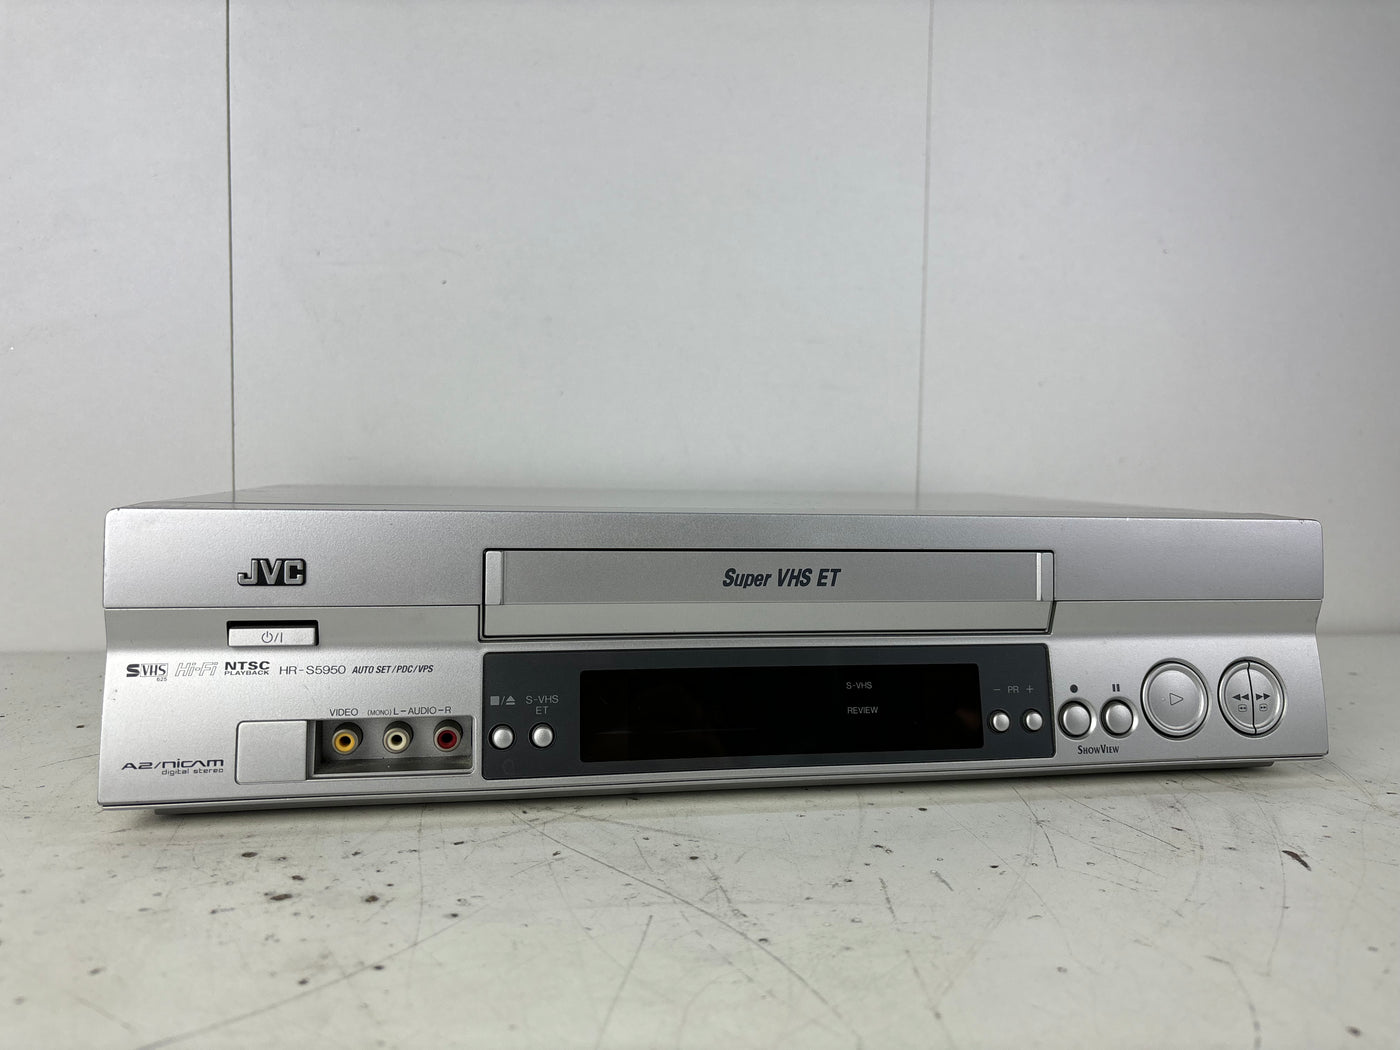 JVC HR-S5950 - VHS Videorecorder - Super VHS ET